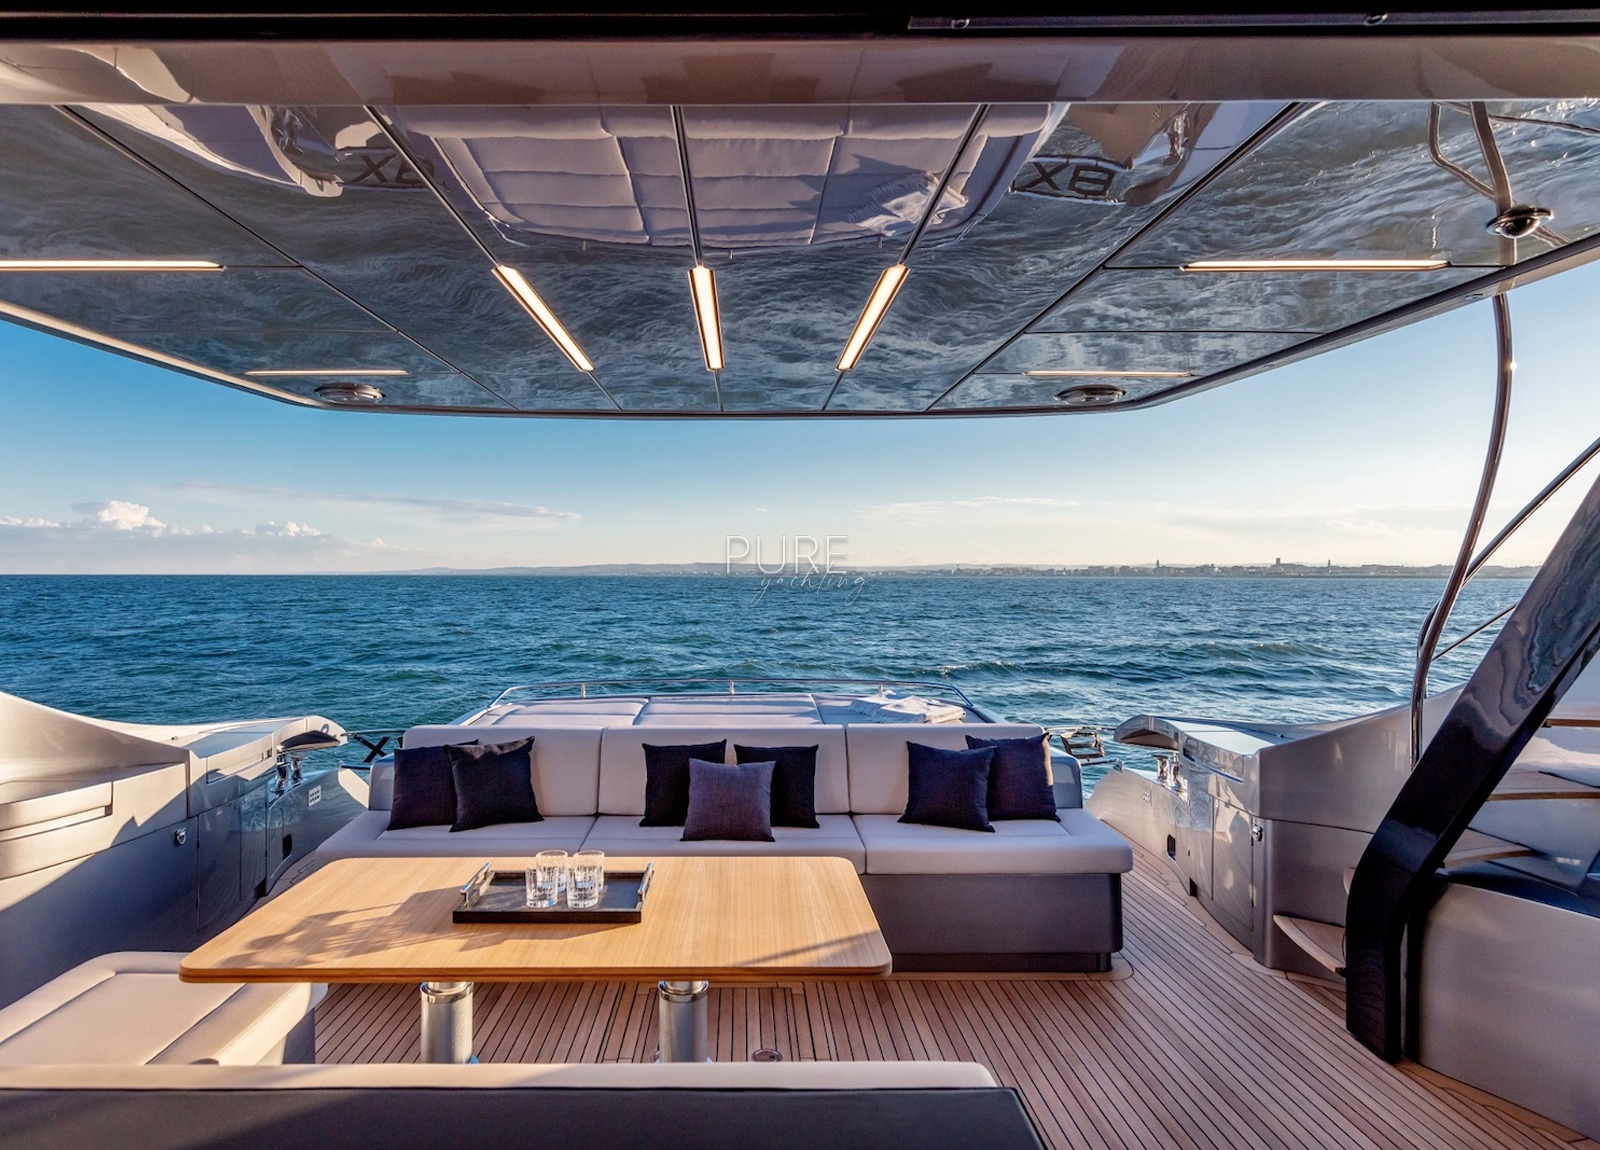 upperdeck seating luxury yacht pershing 8x beyond balearic islands